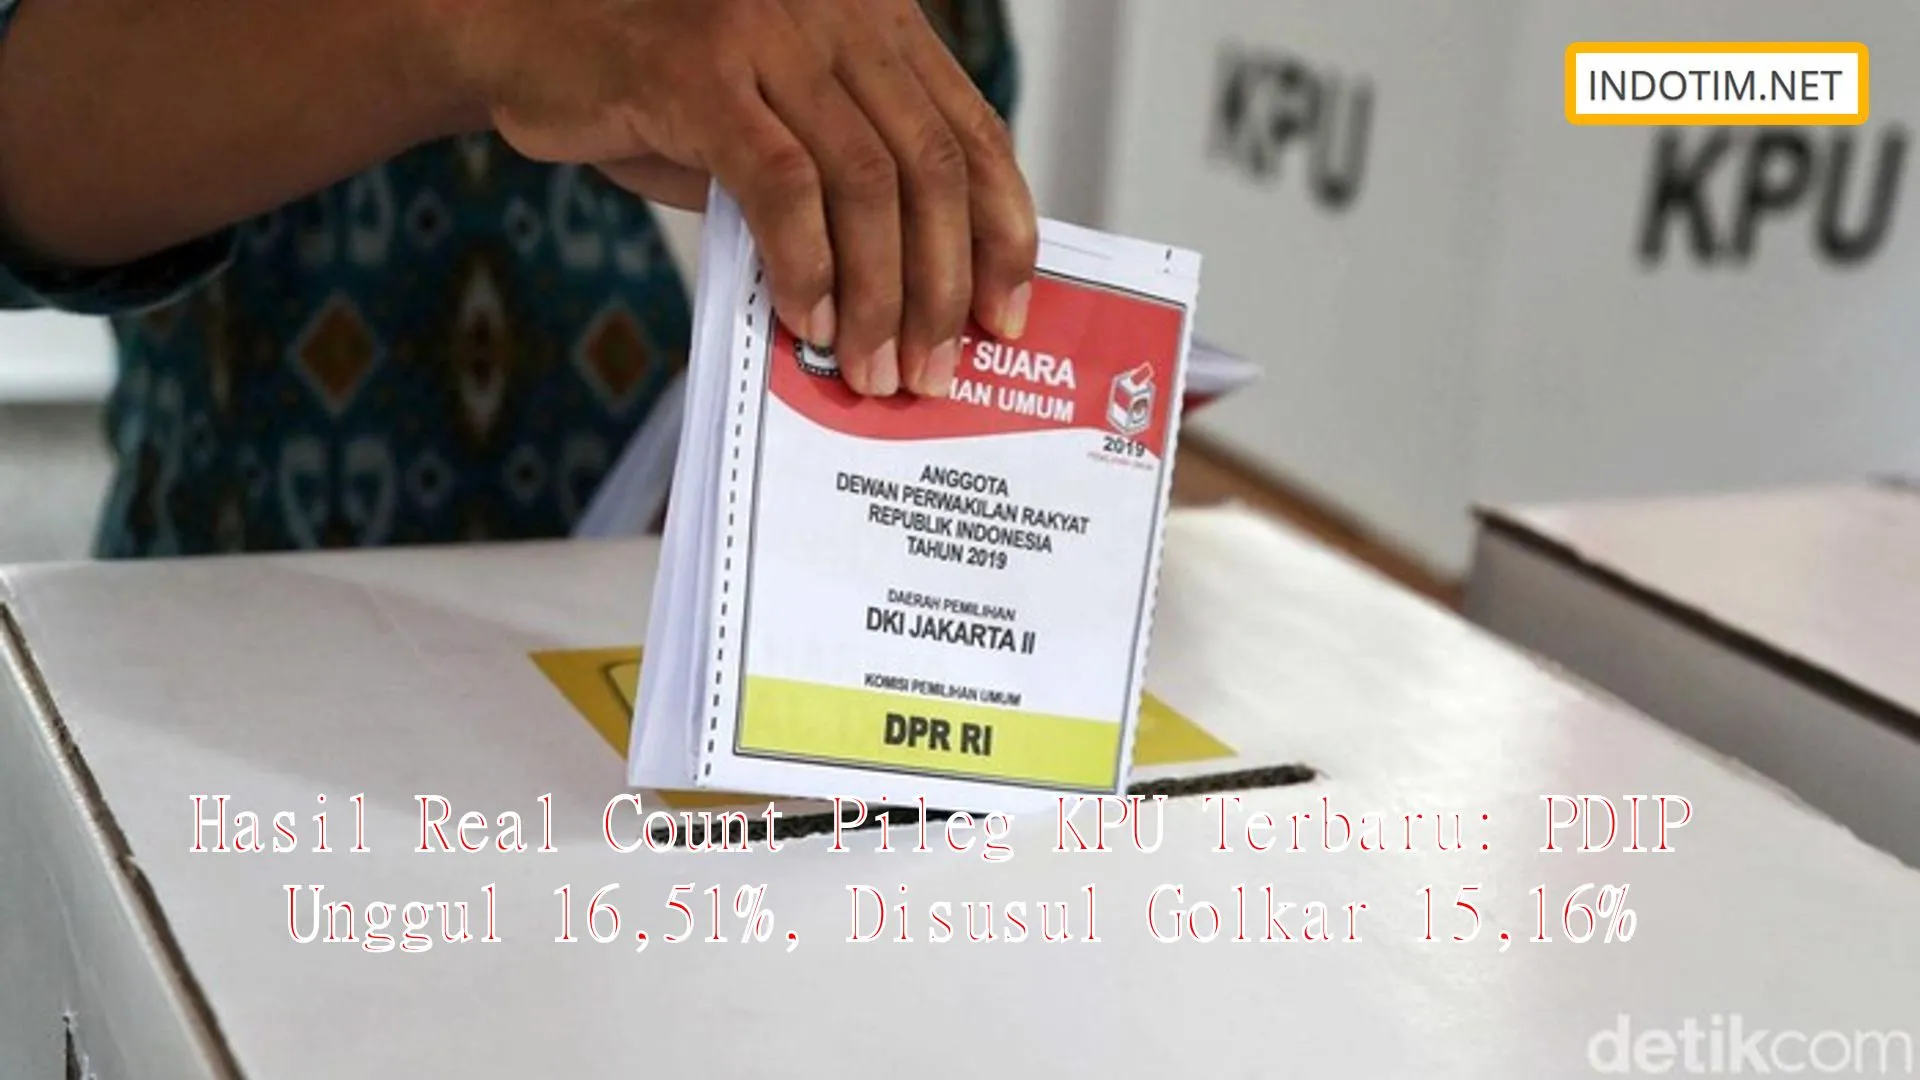 Hasil Real Count Pileg KPU Terbaru: PDIP Unggul 16,51%, Disusul Golkar 15,16%